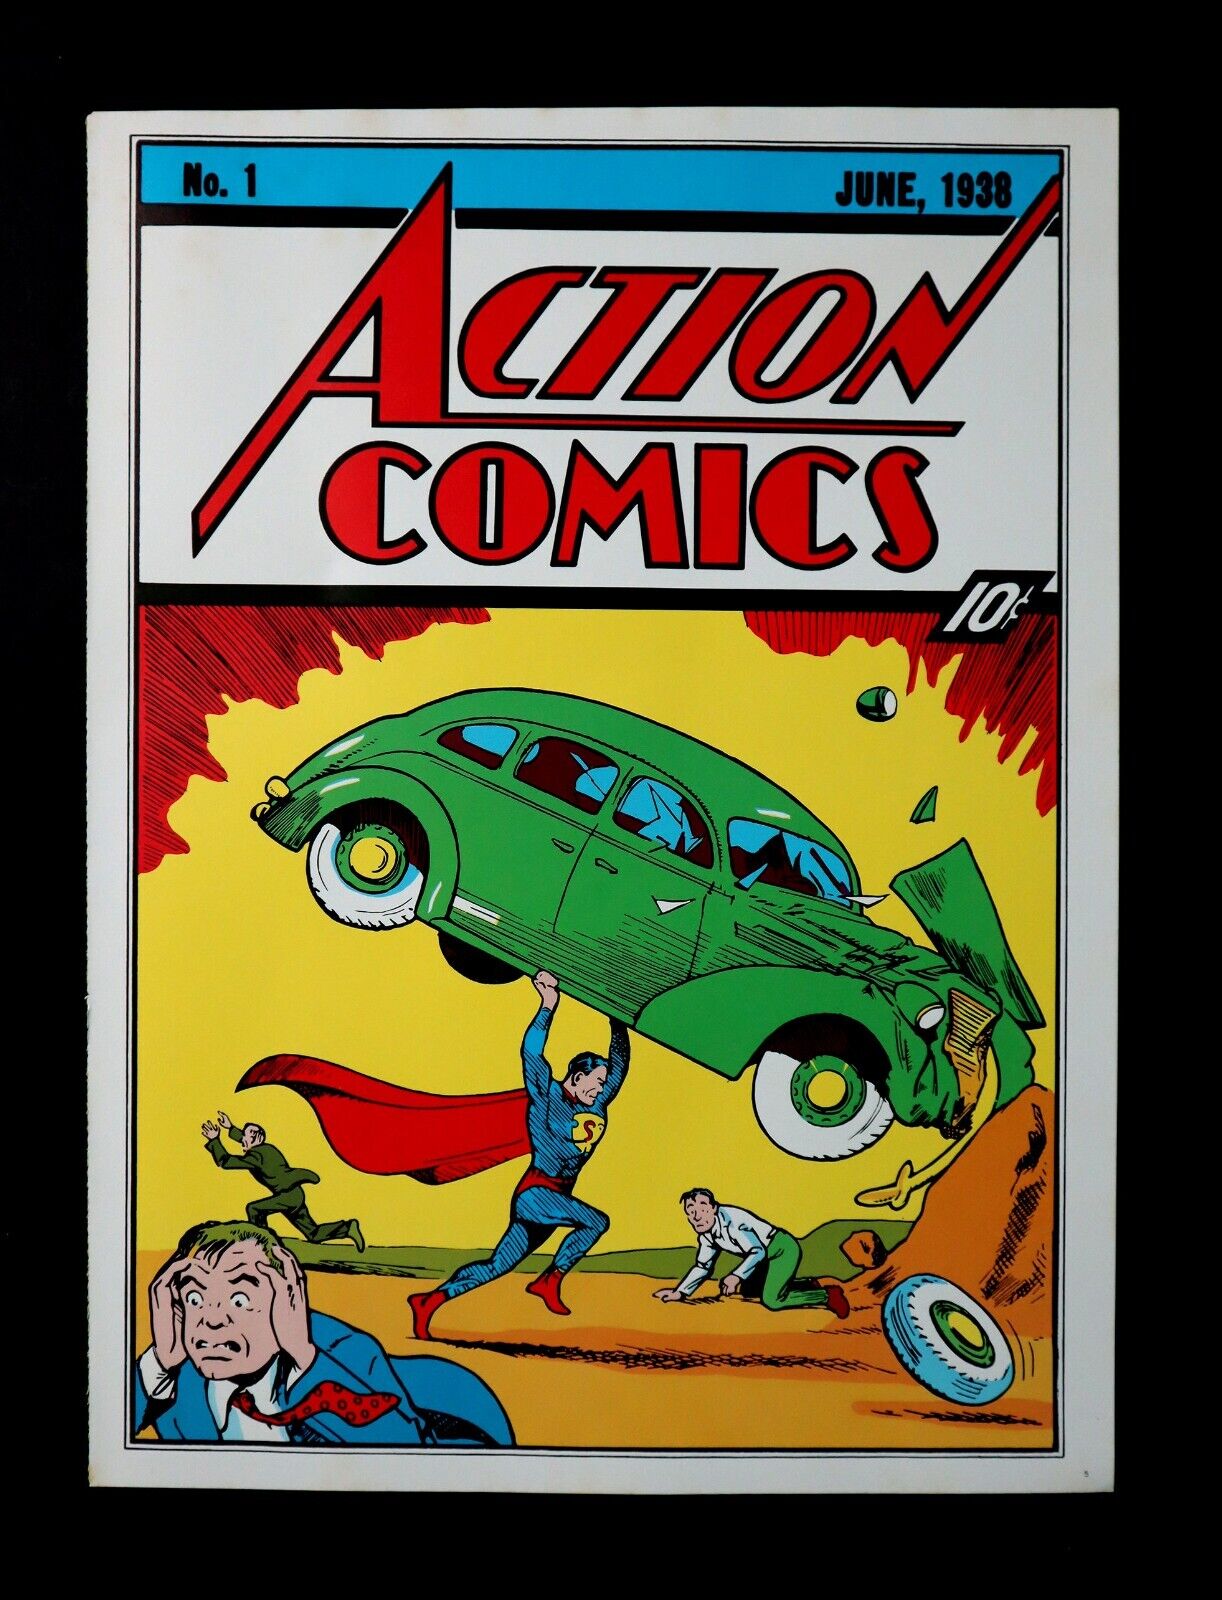 Vintage original 1970's DC Action Comics 1 Superman comic book cover art poster